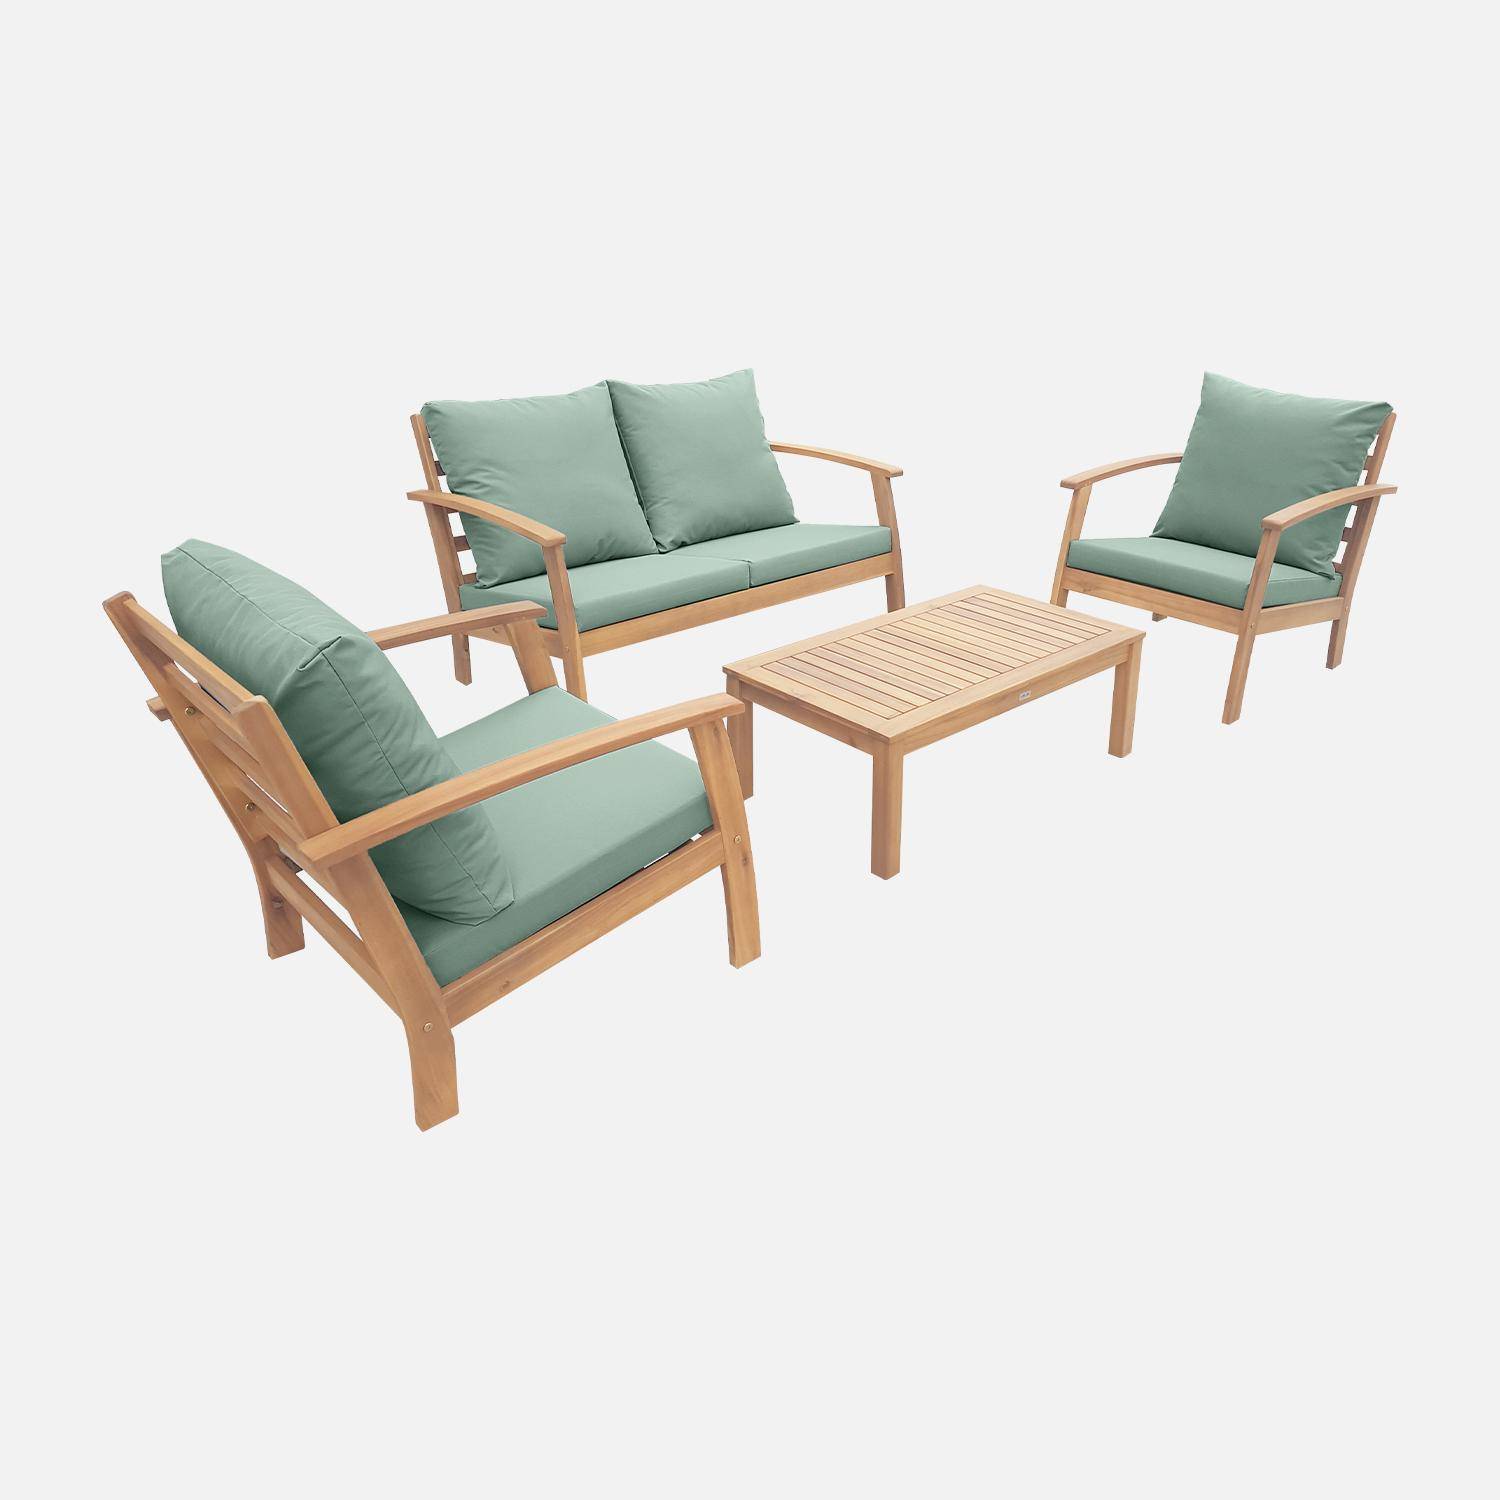 4-seater wooden garden sofa - Acacia wood sofa, armchairs and coffee table, designer piece  - Ushuaia - Sage green,sweeek,Photo2